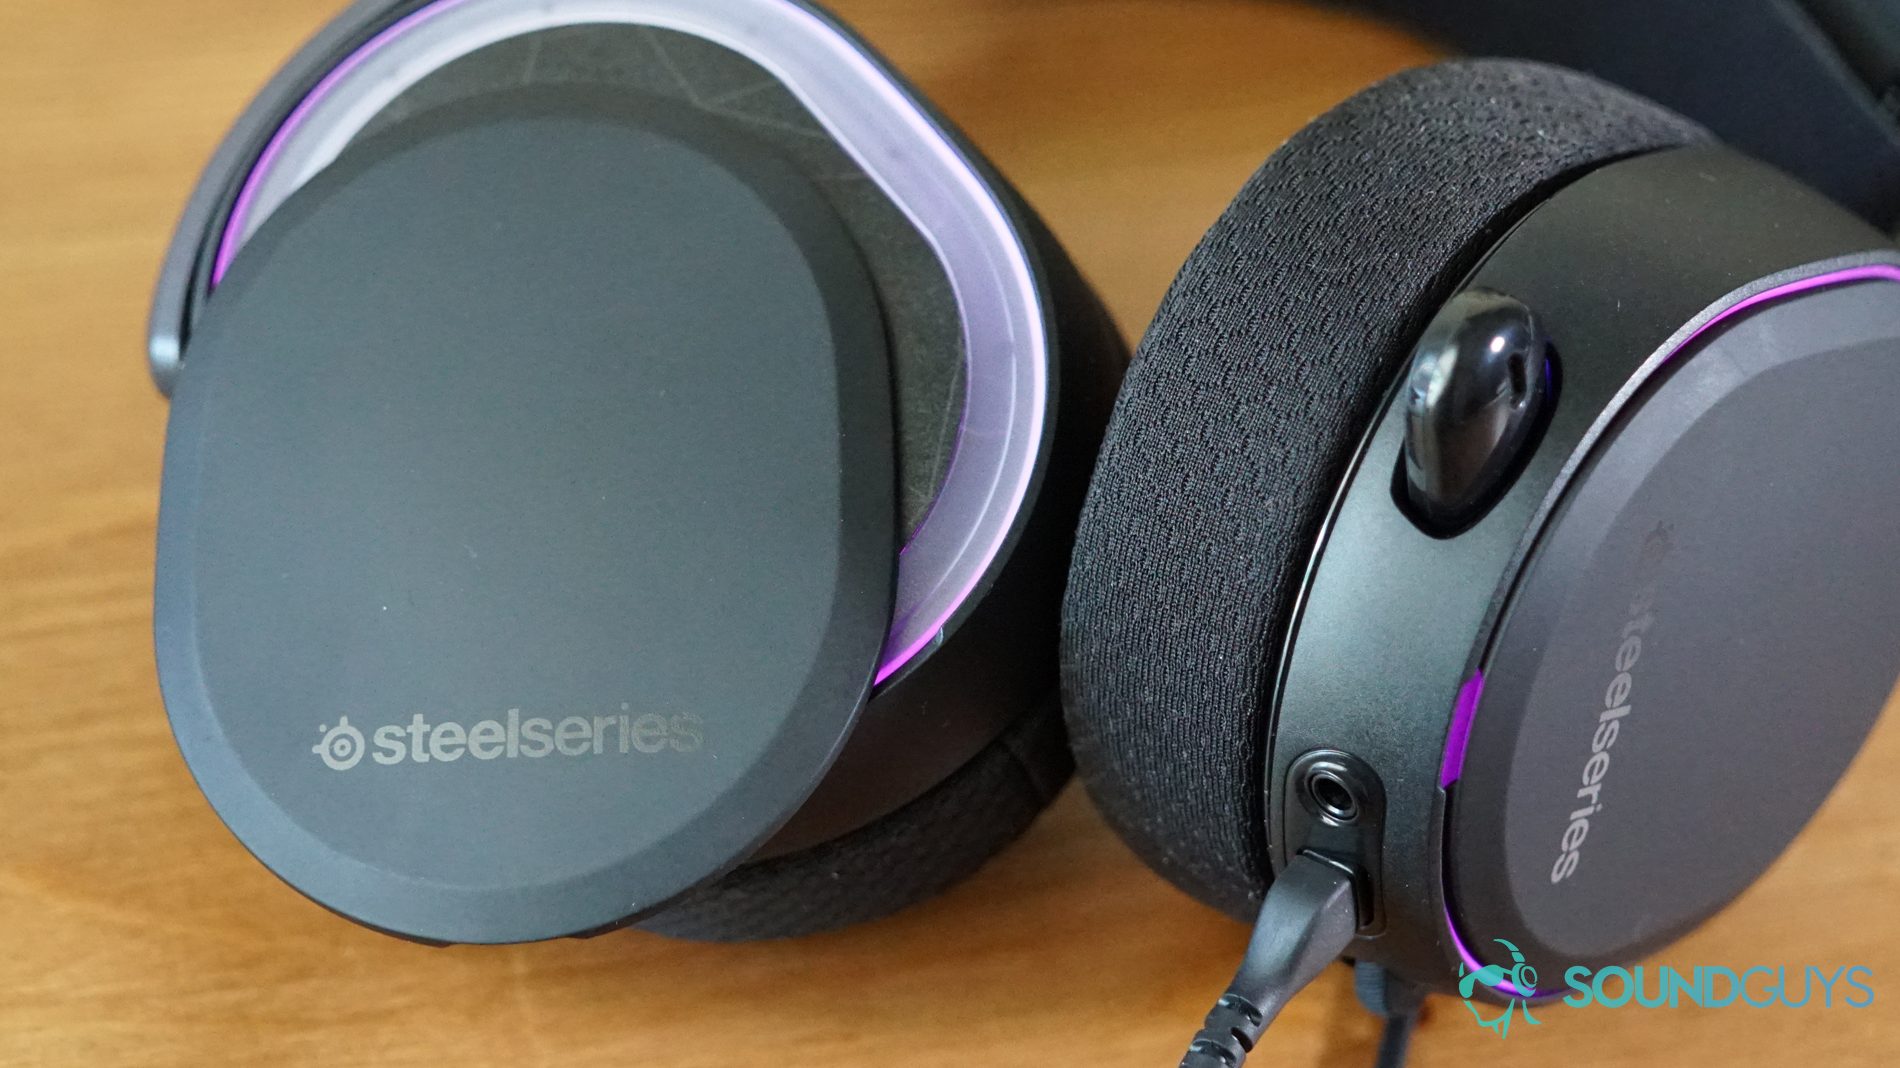 SteelSeries Arctis Nova Pro Wireless review - SoundGuys